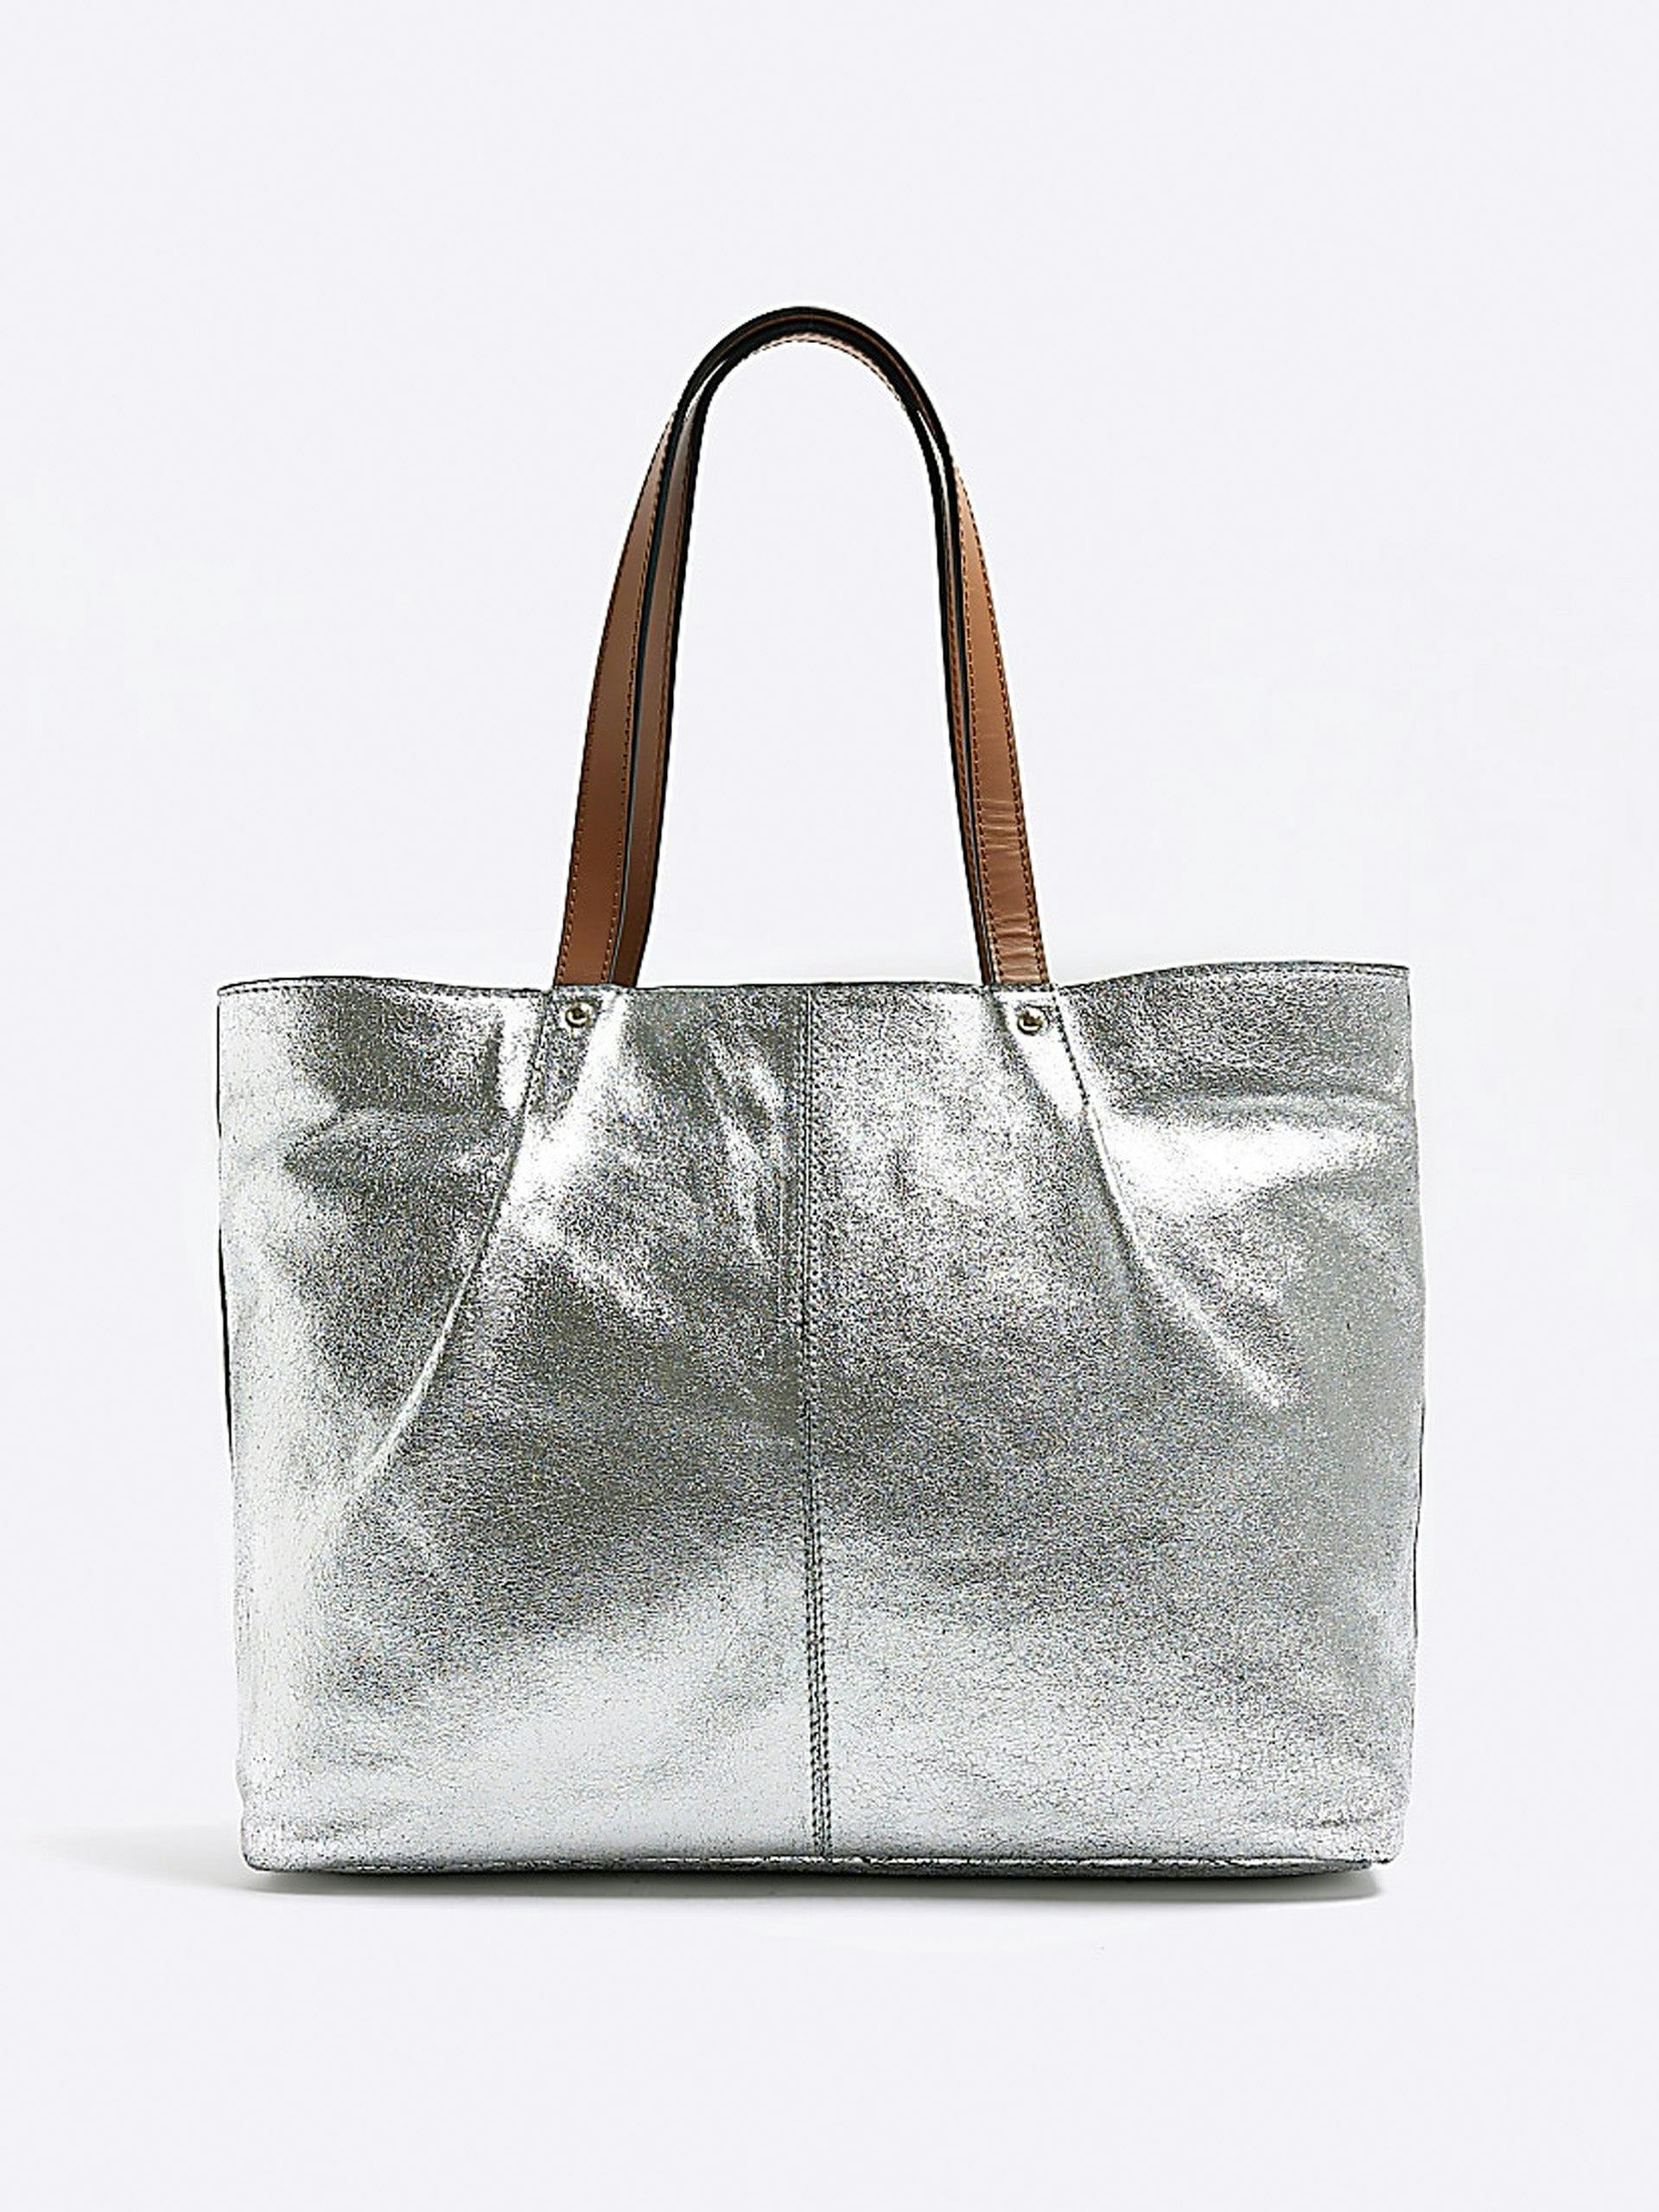 Silver leather metallic shopper bag